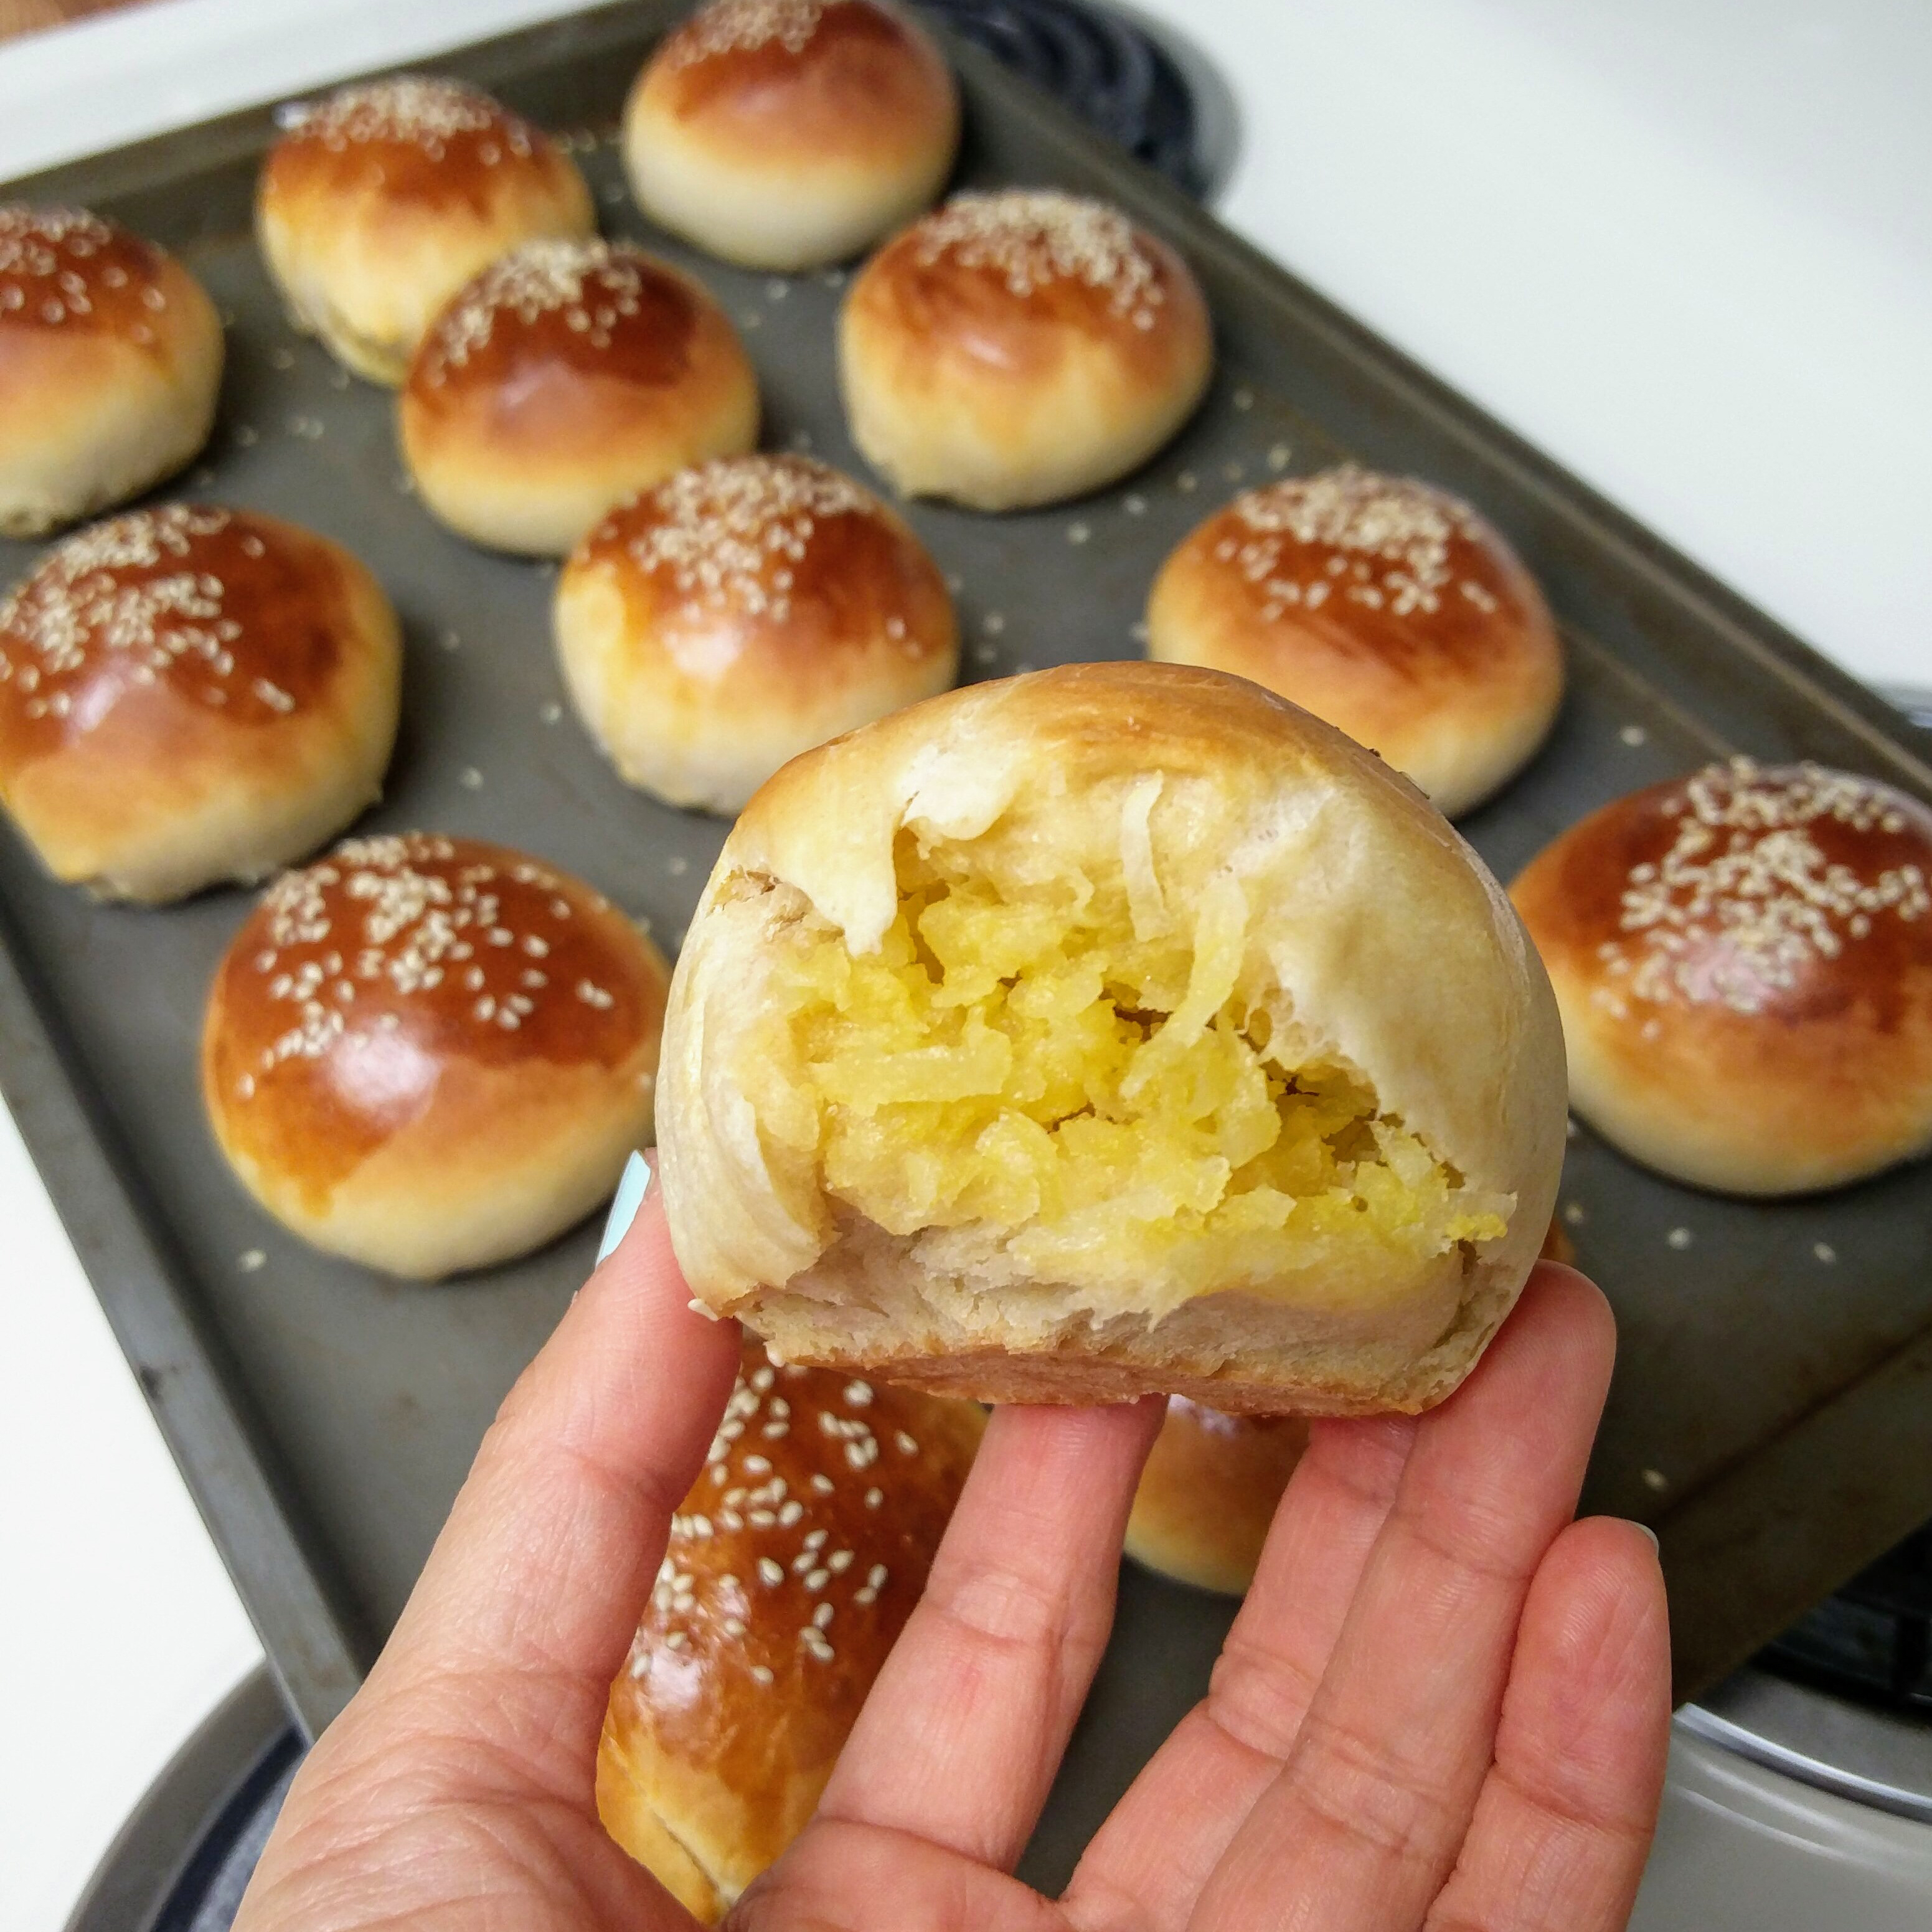 Sweet buns. Sweet bun. Pictures Dough fdffffdfdddffdfdfdfdfdfdf.